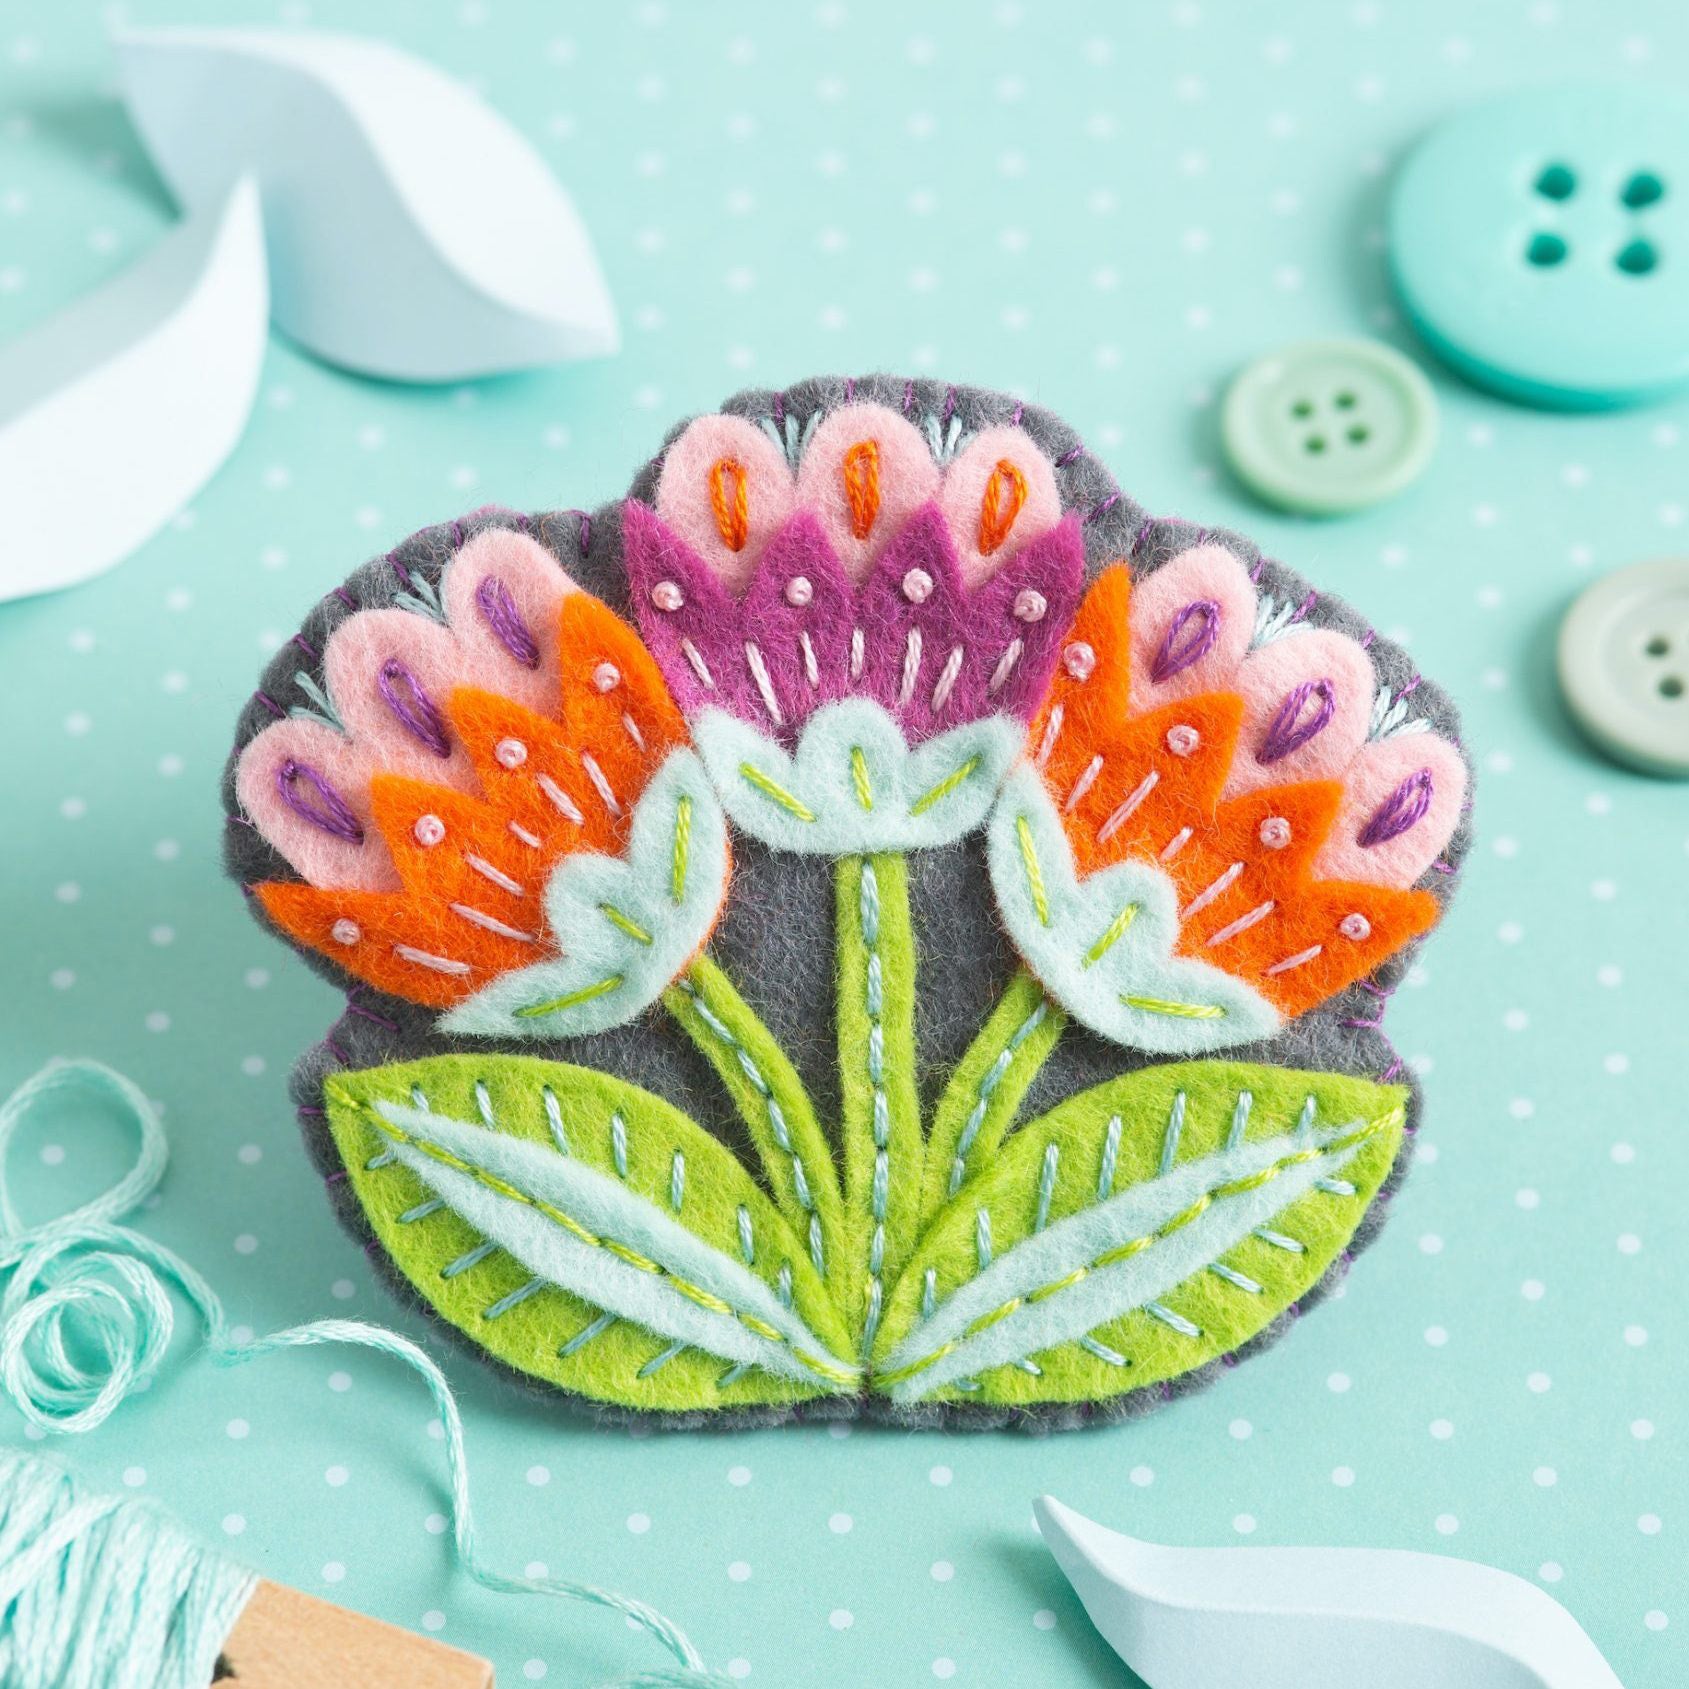 DIY Crafts - Felt Flower Brooch Pin Step by Step Tutorial 